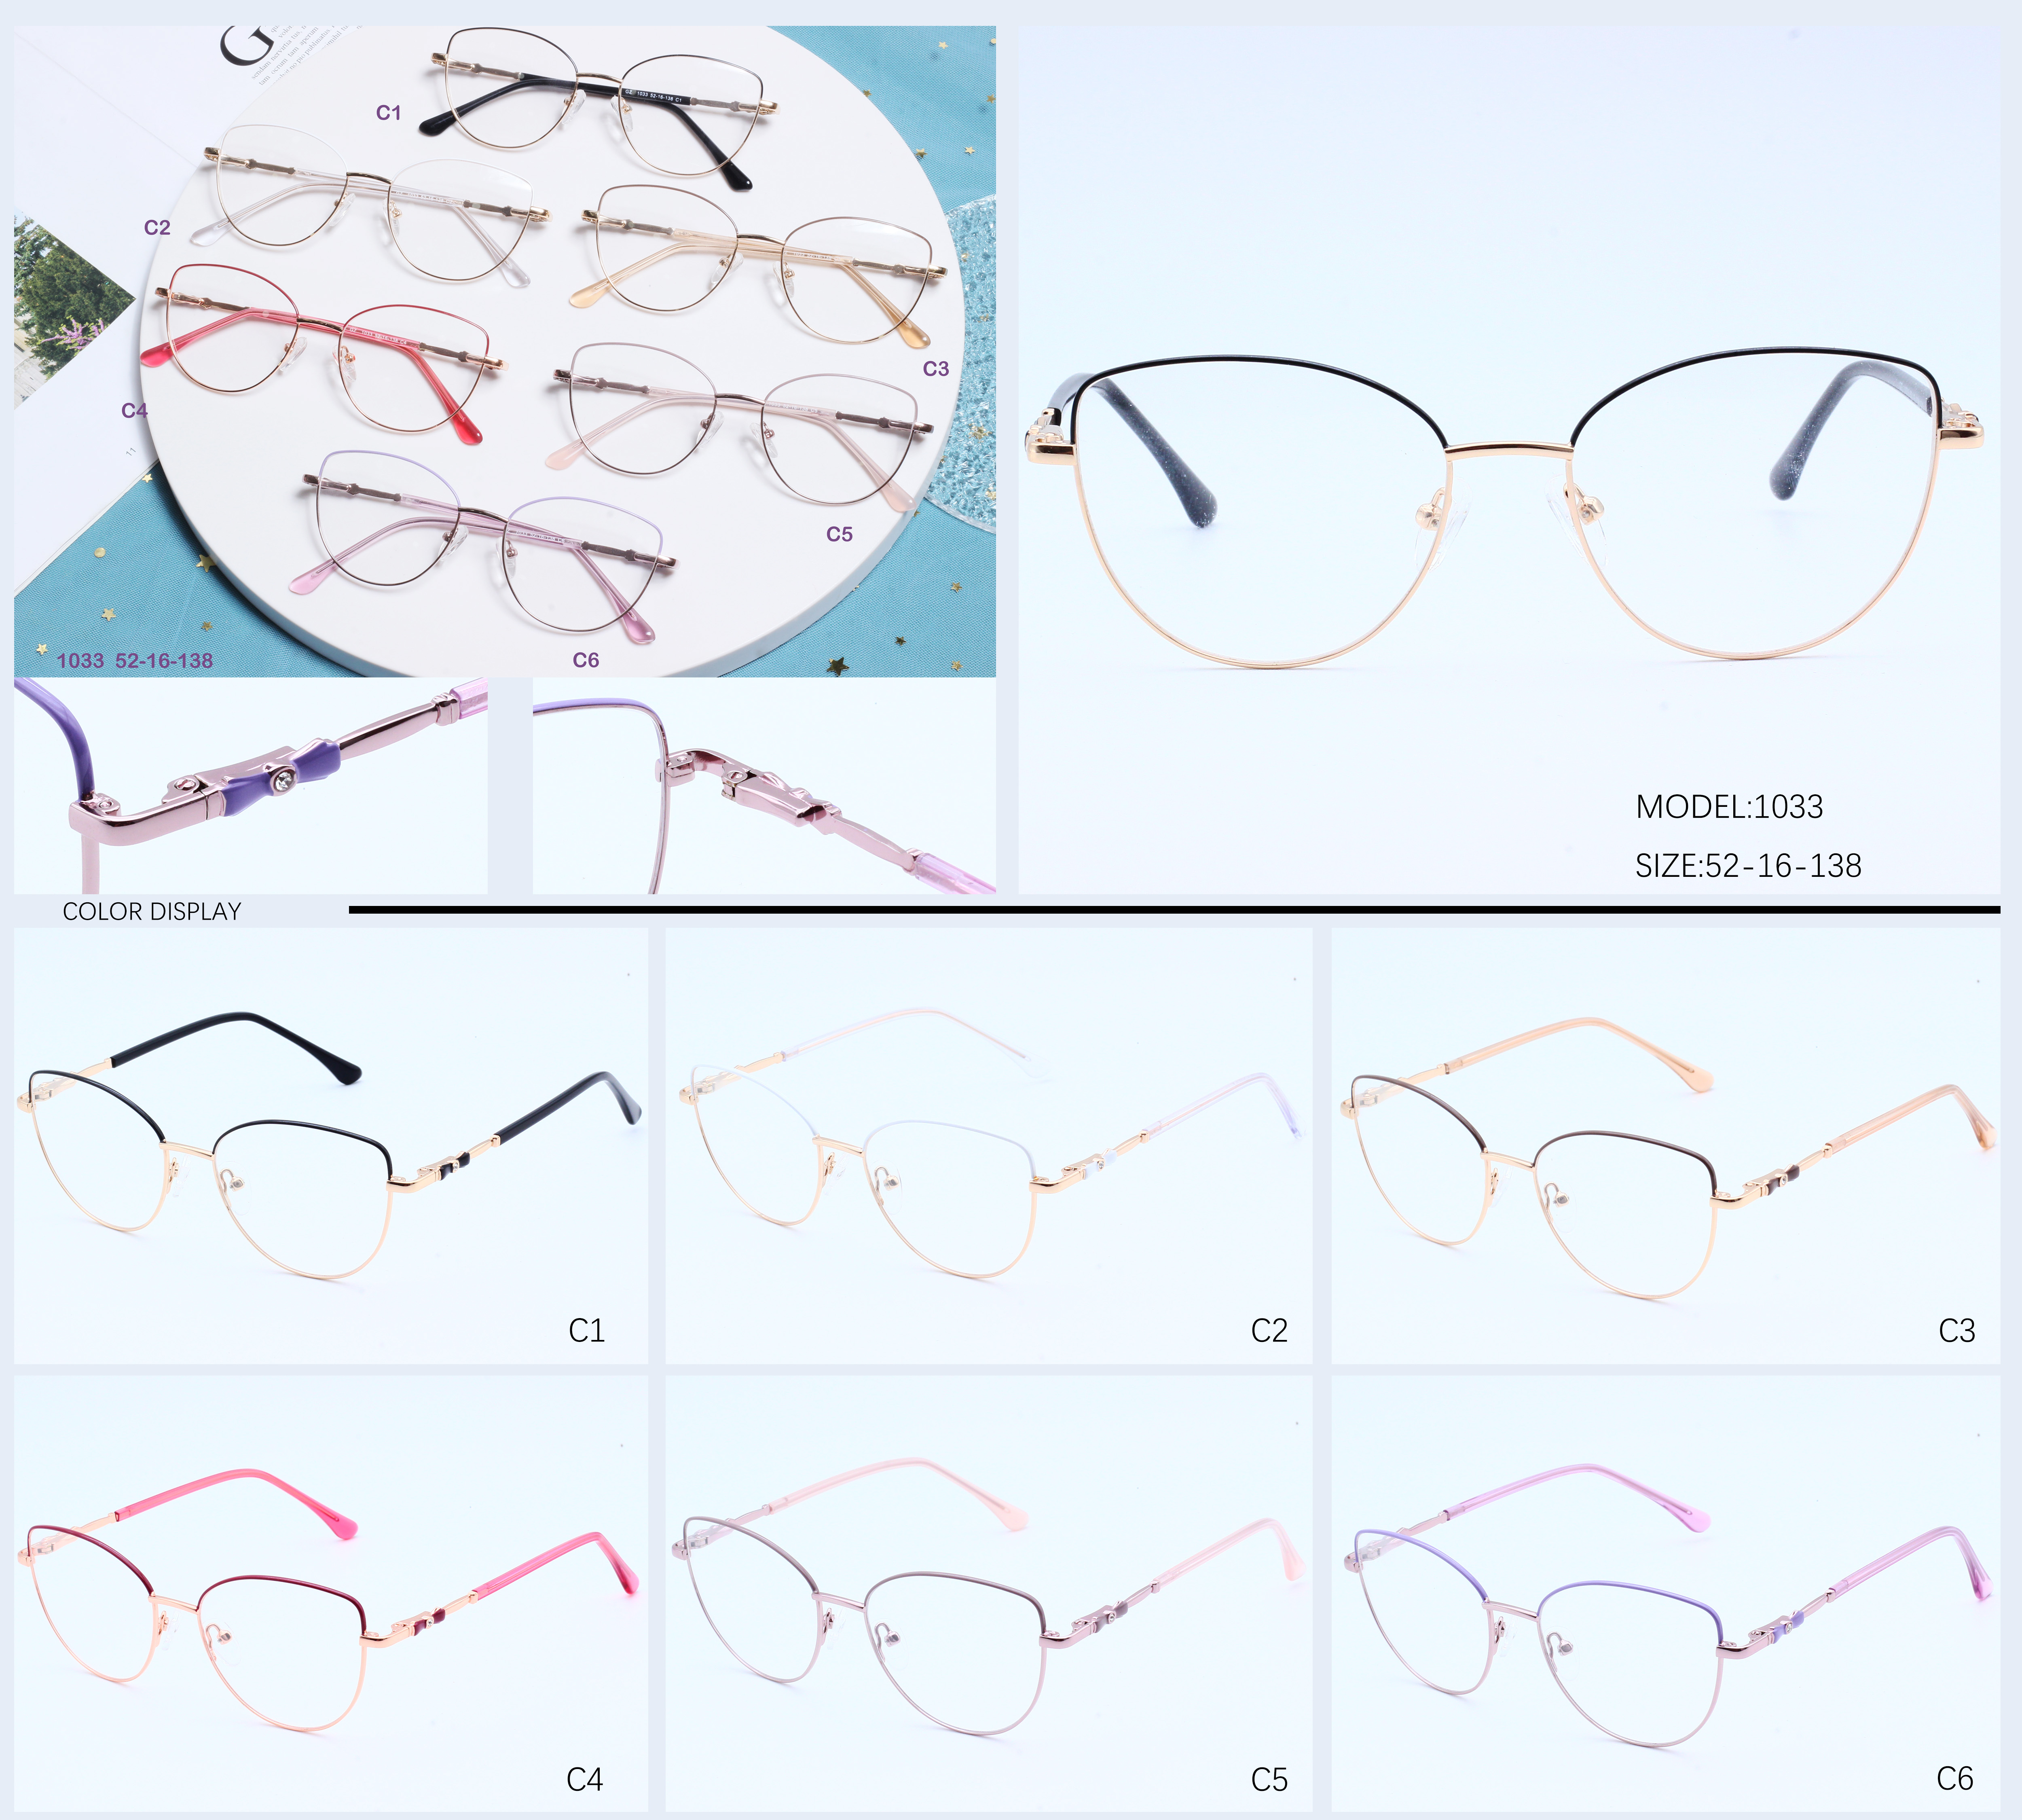 Stock clearance metal optical glasses frame random stainless metal